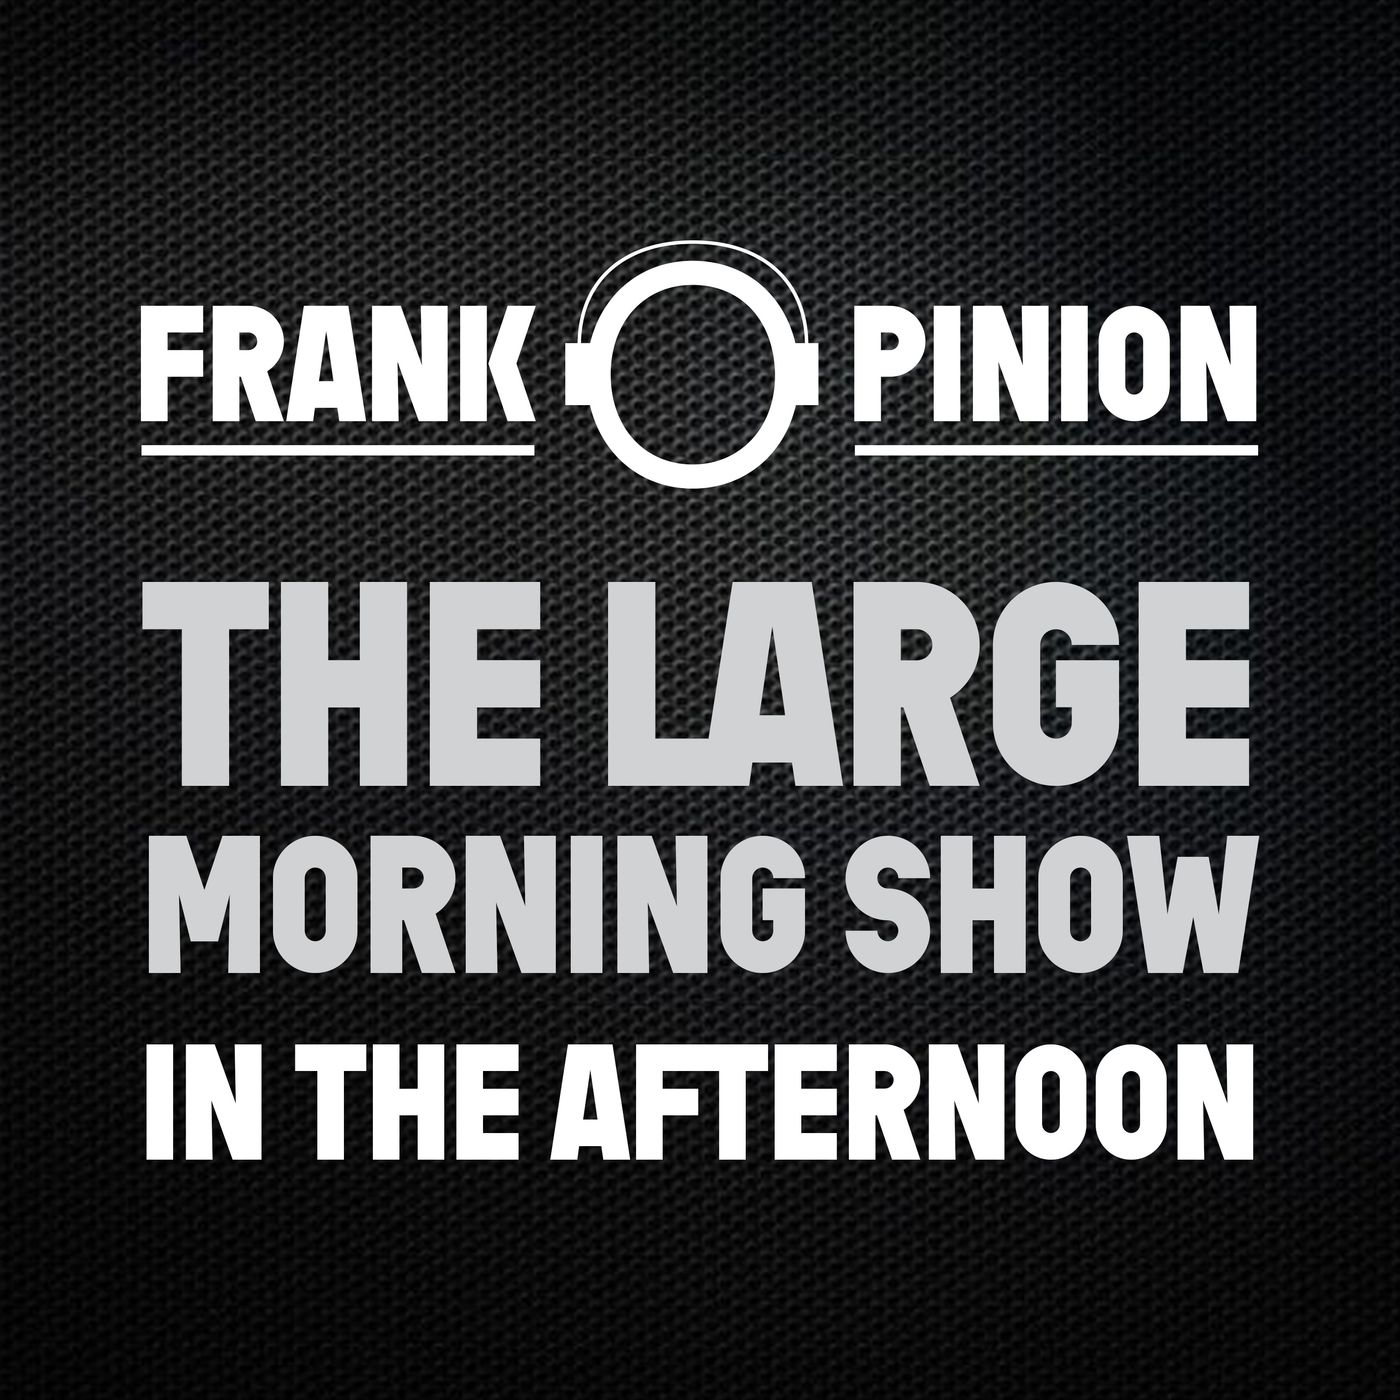 Frank O. Pinion